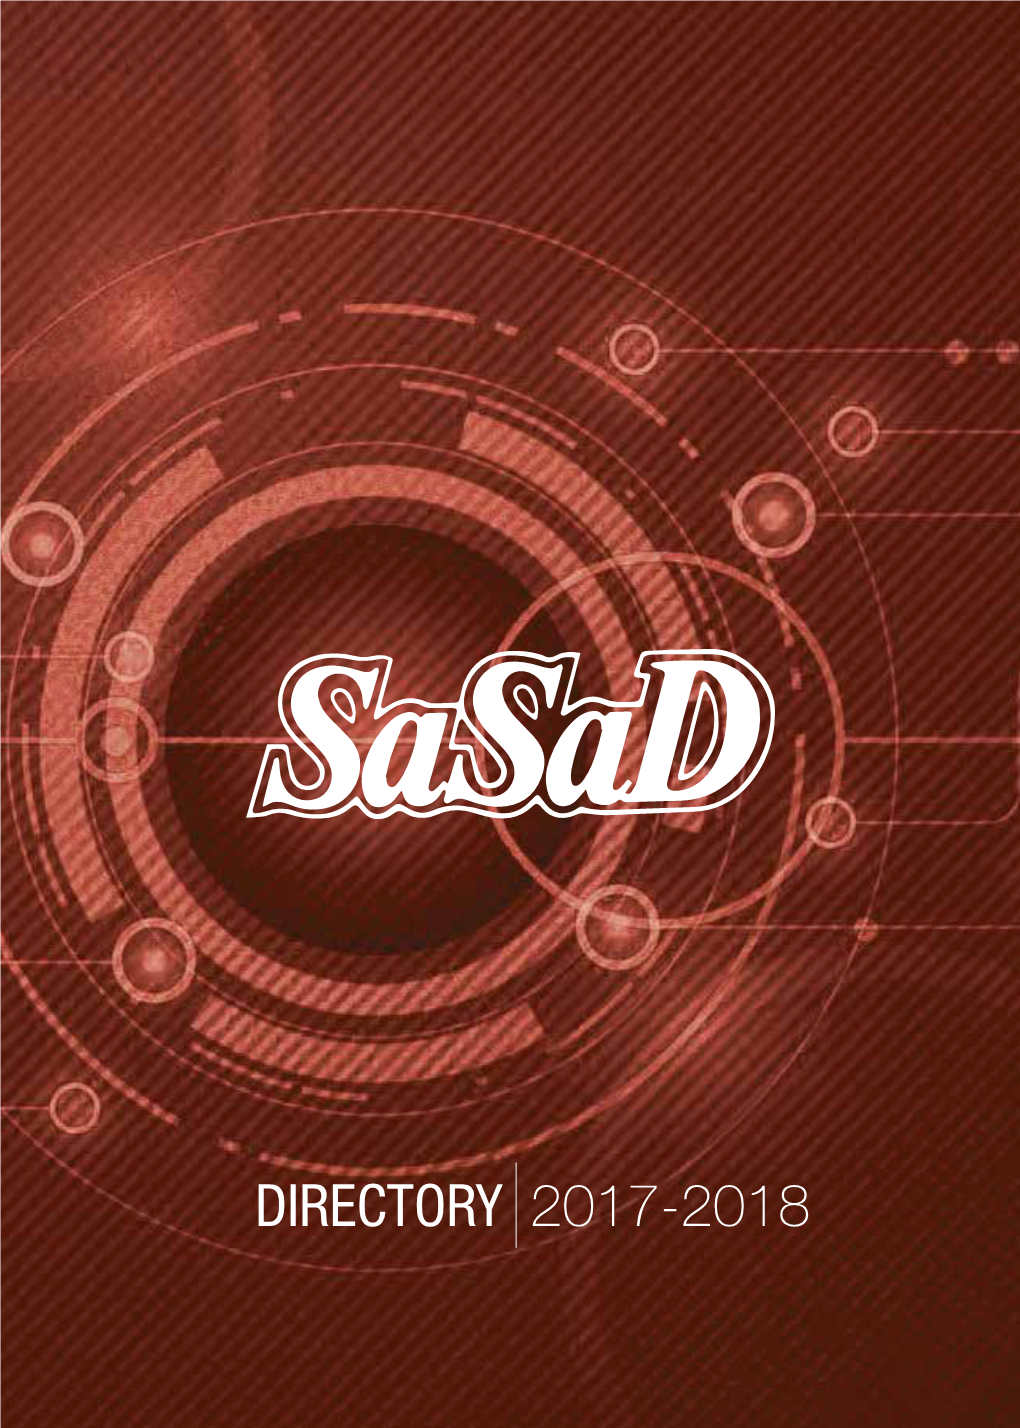 Directory 2017-2018